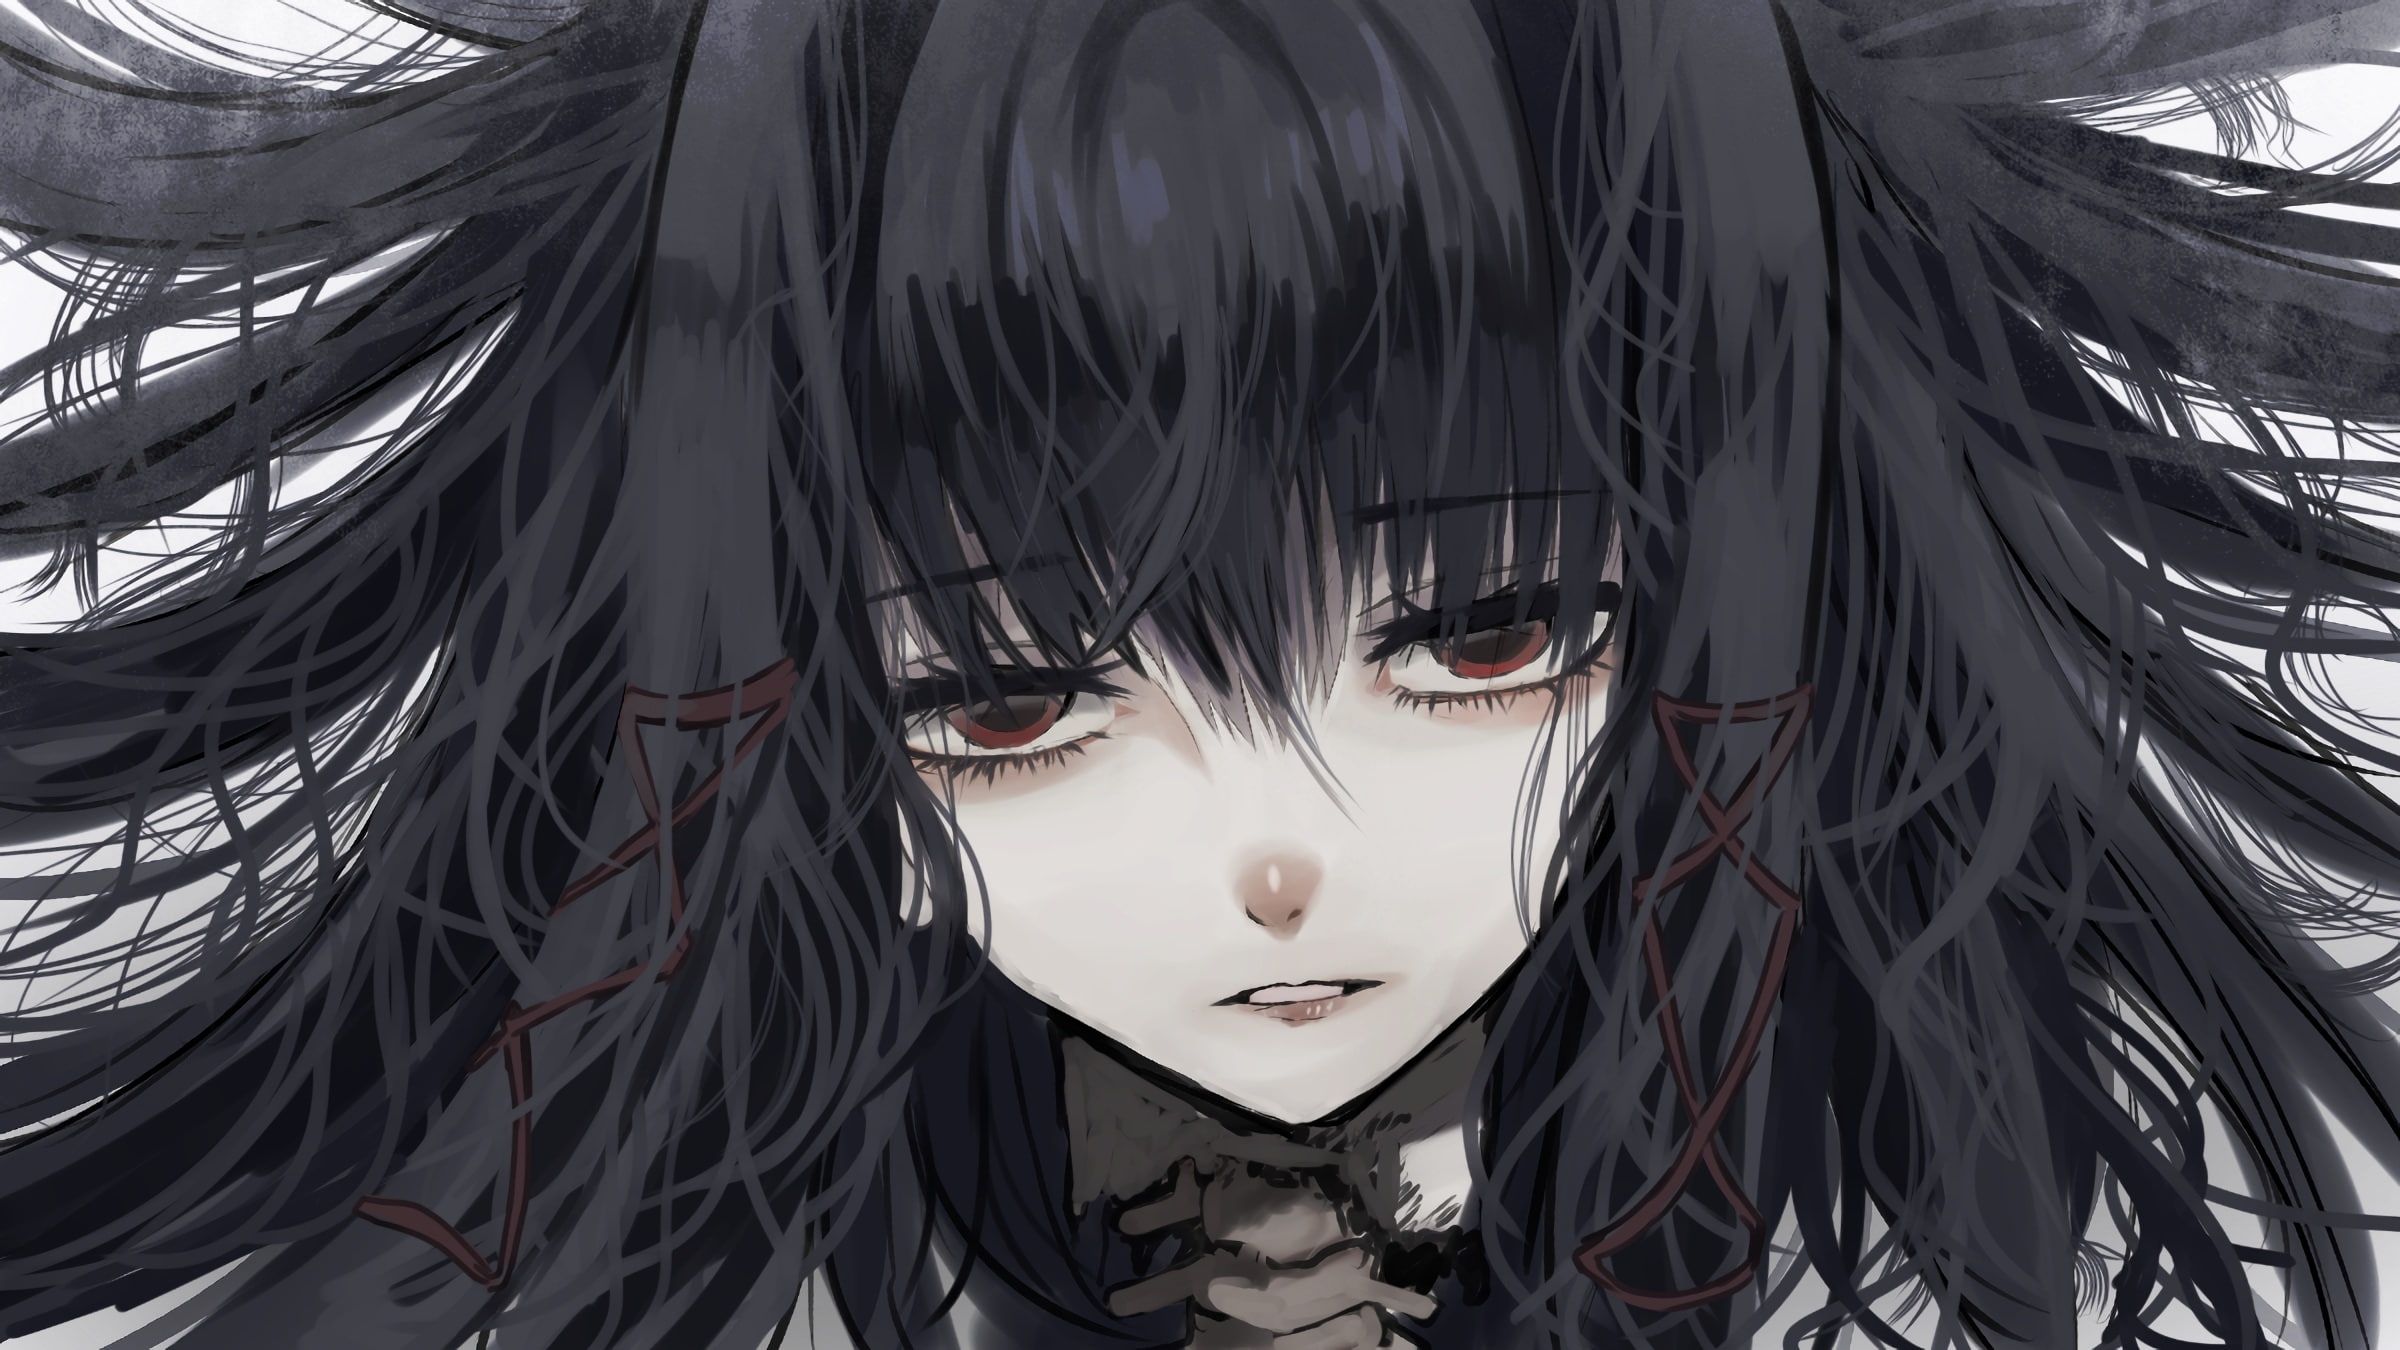 Free Download. HD Wallpaper: Anime Girl, Gothic, Close Up, Depressed, Black Hair, Representation